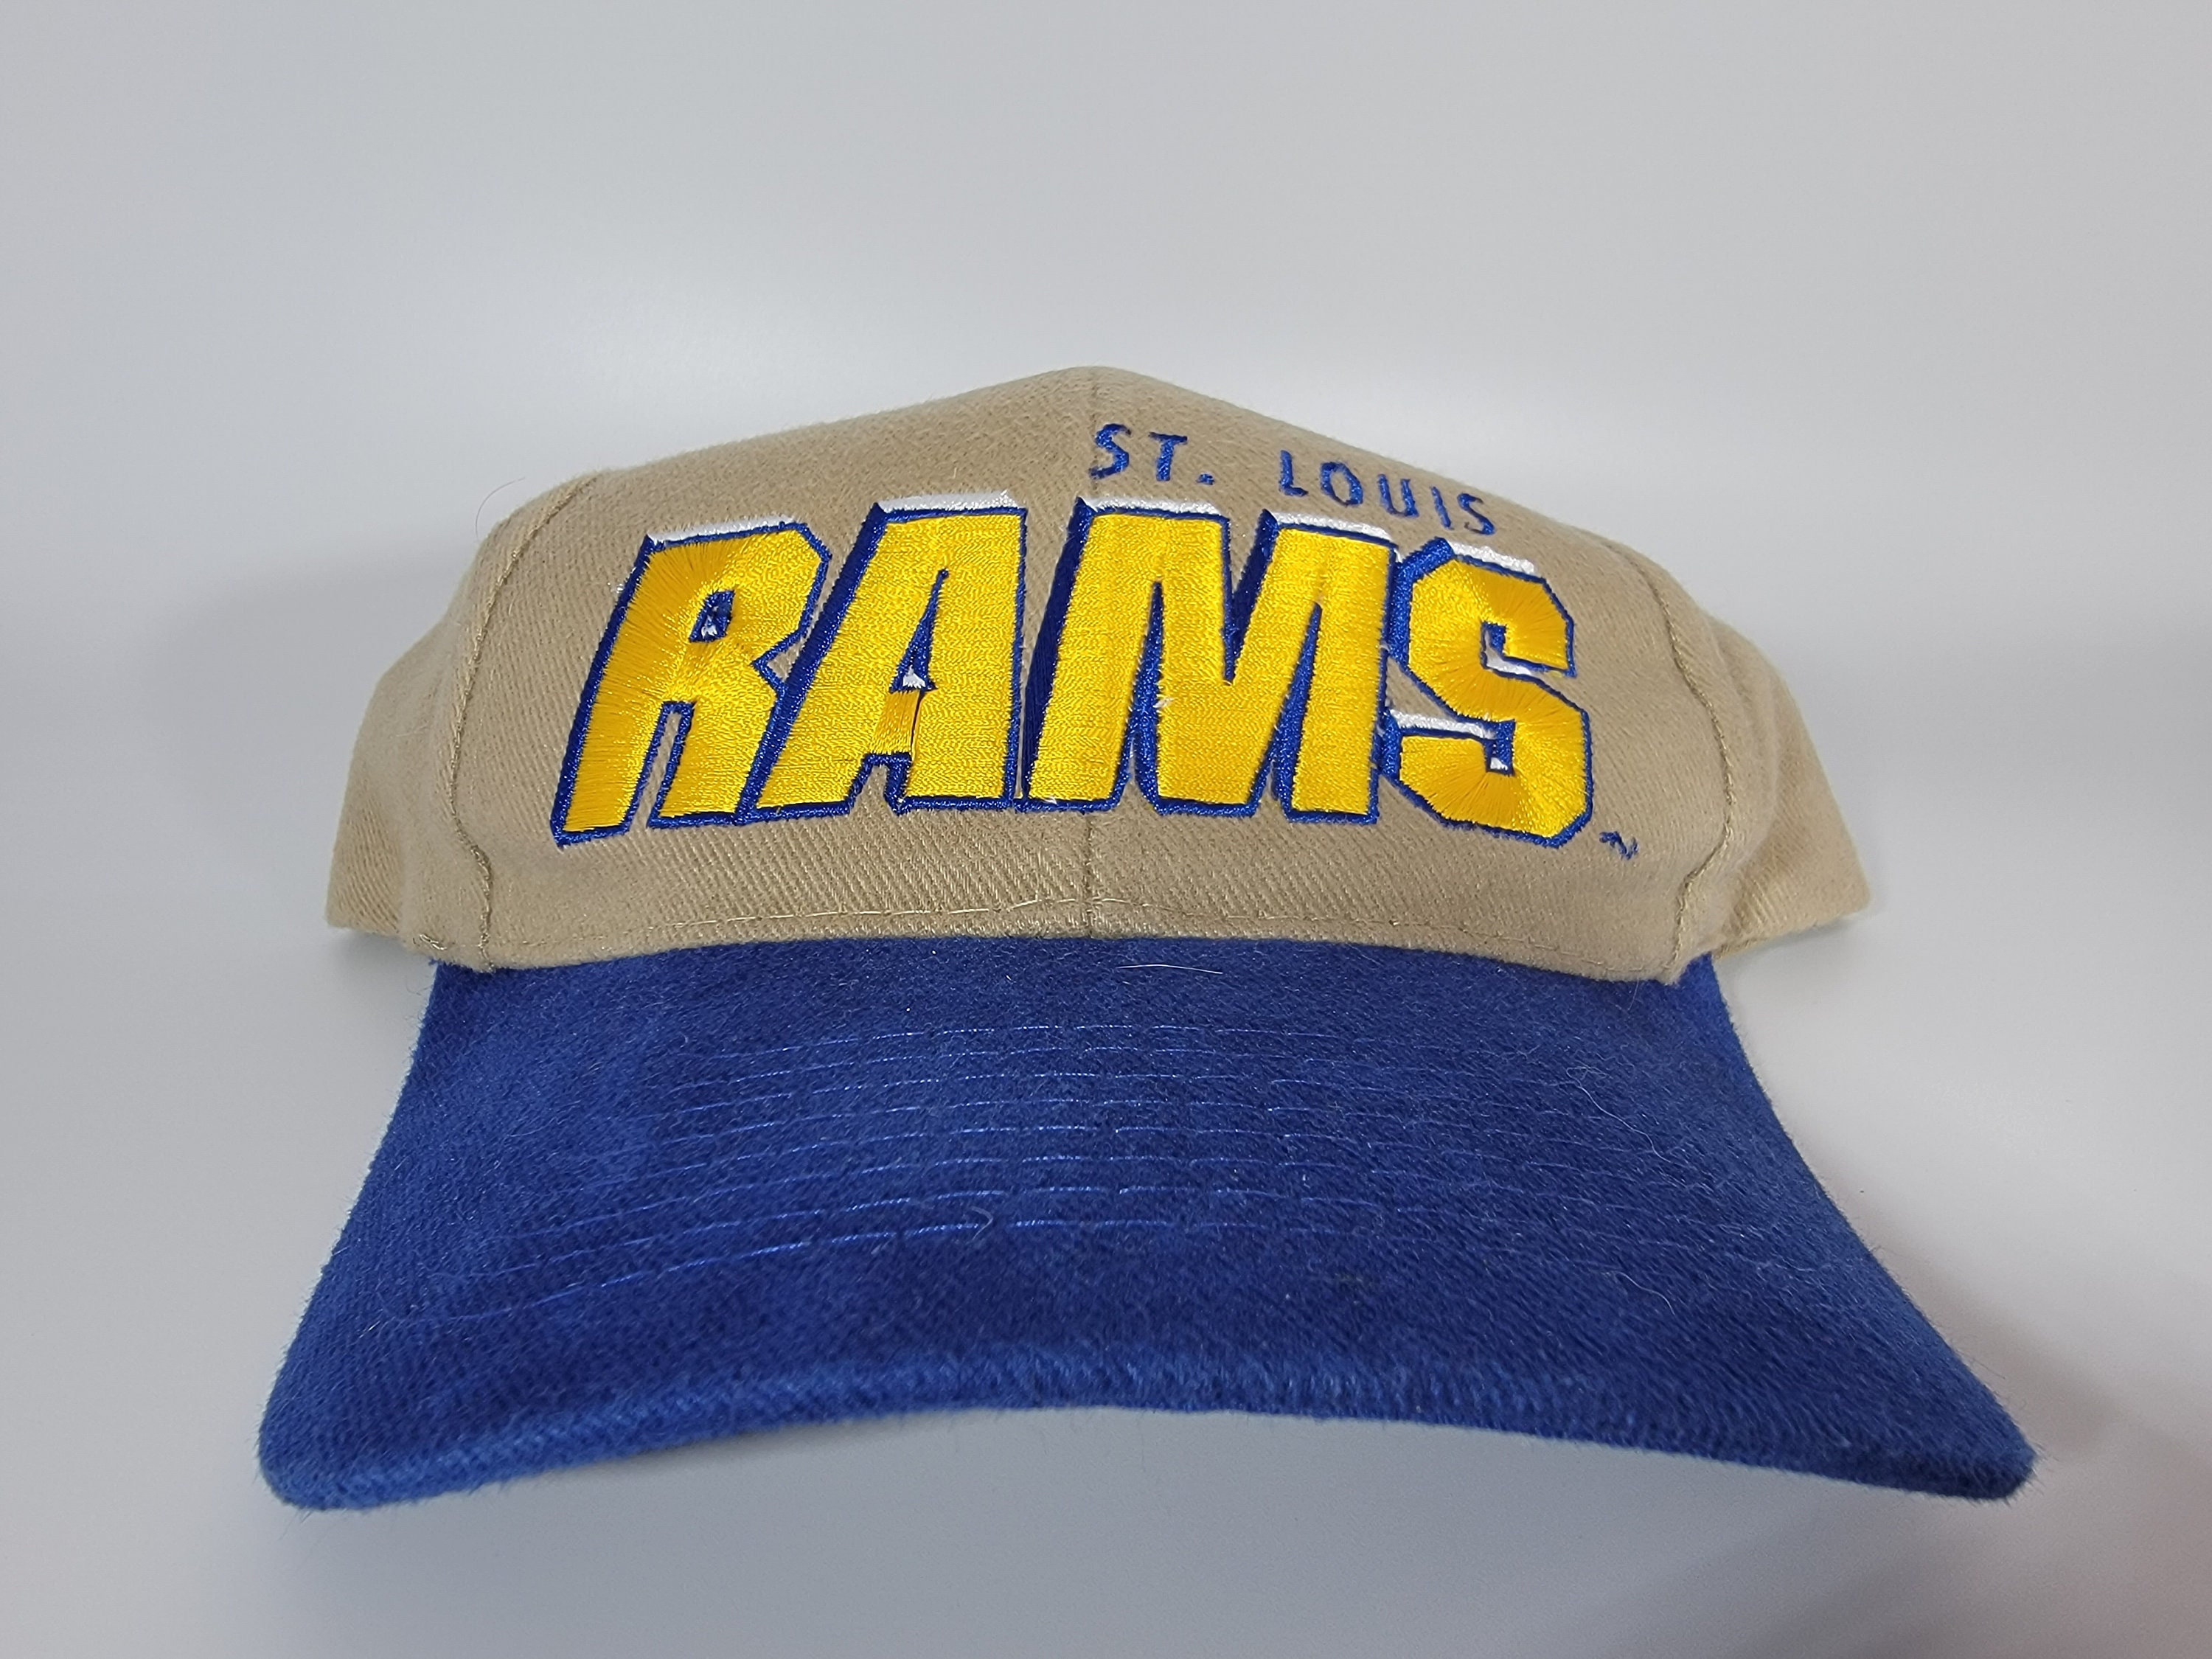 Vintage Logo Athletic St Louis Rams 1995 Inaugural Season Hat Snap Back Blue